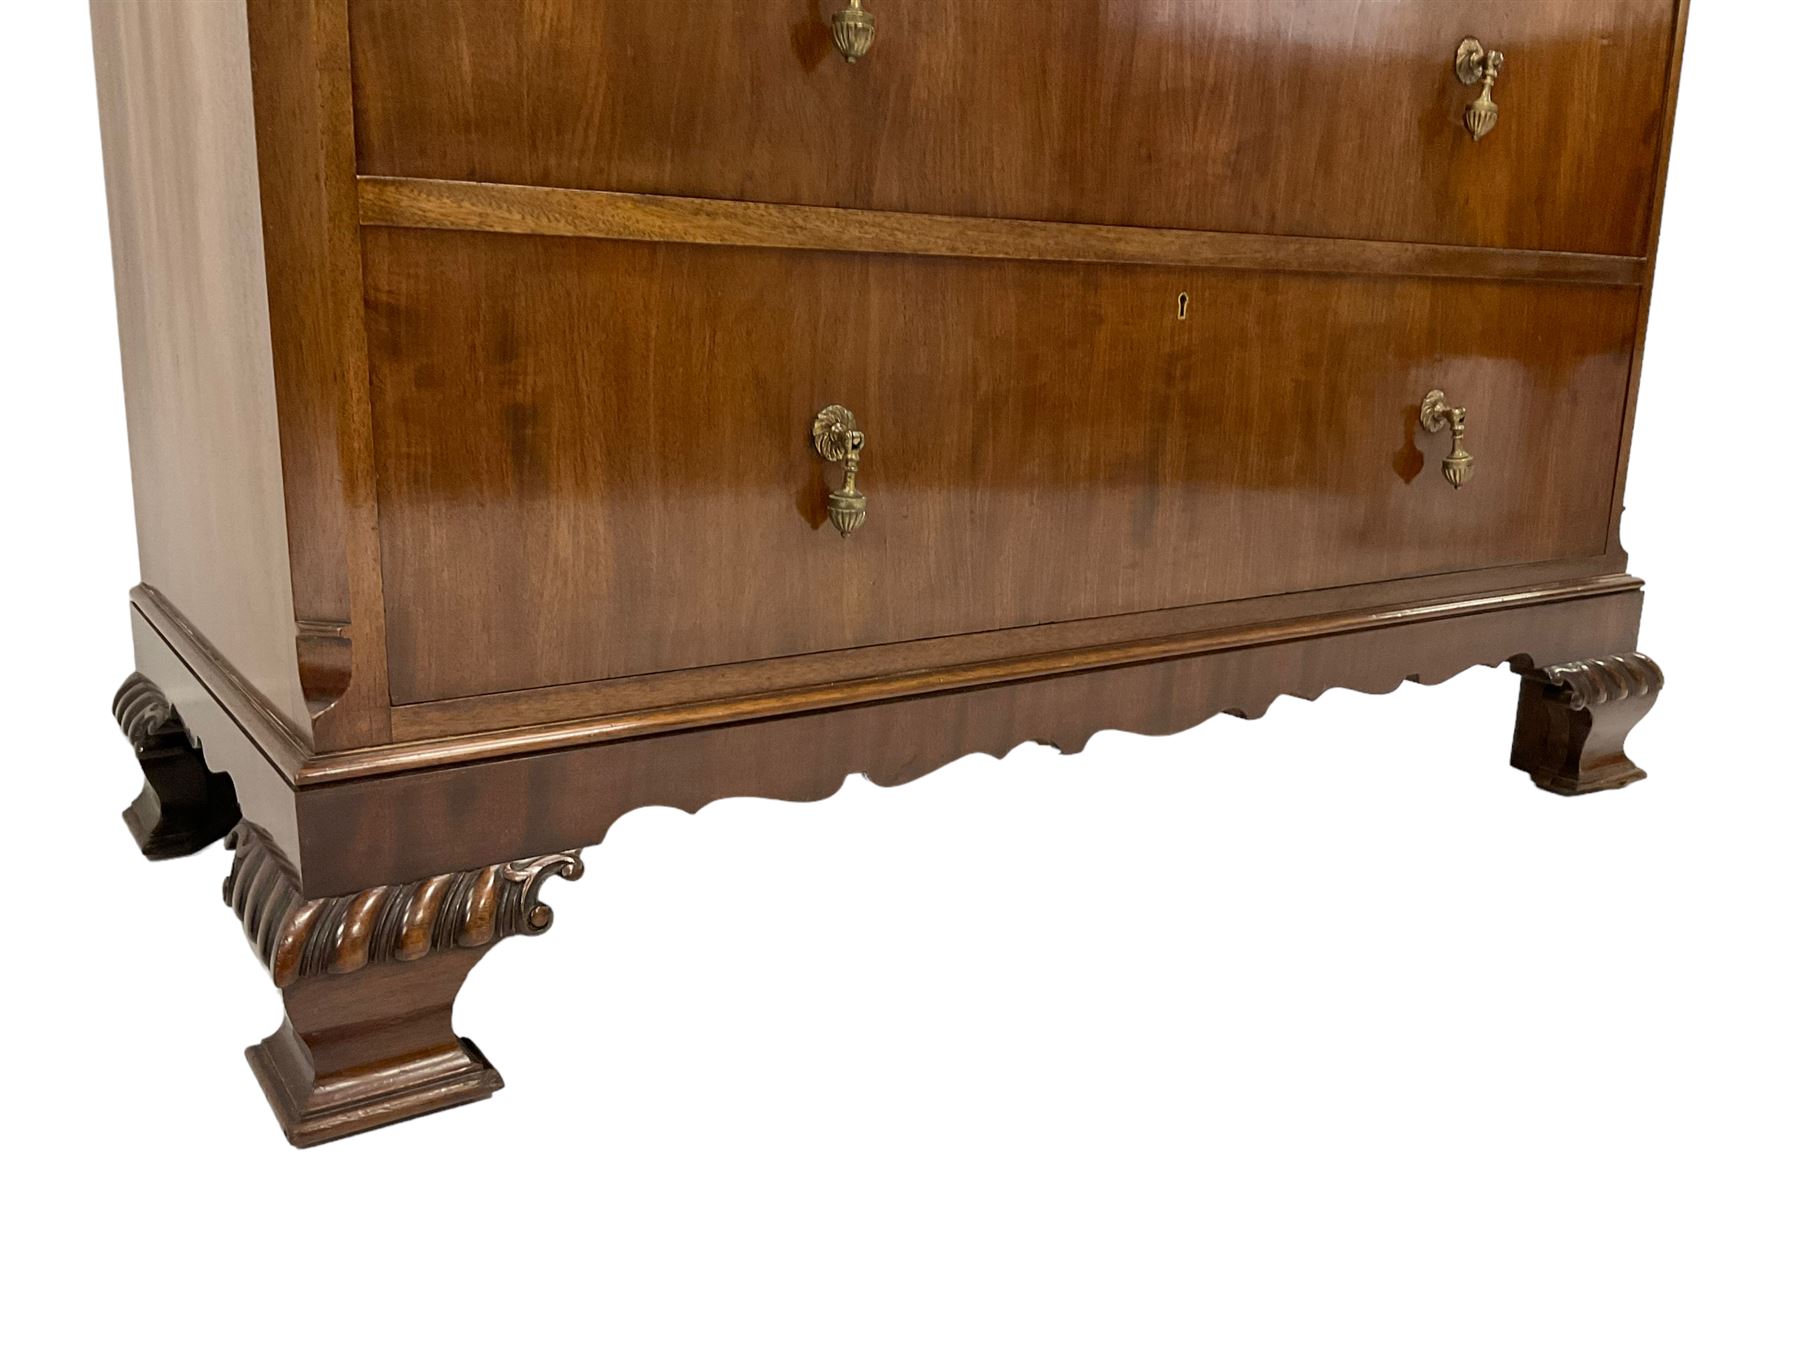 Mid-20th century mahogany linen chest - Image 4 of 7